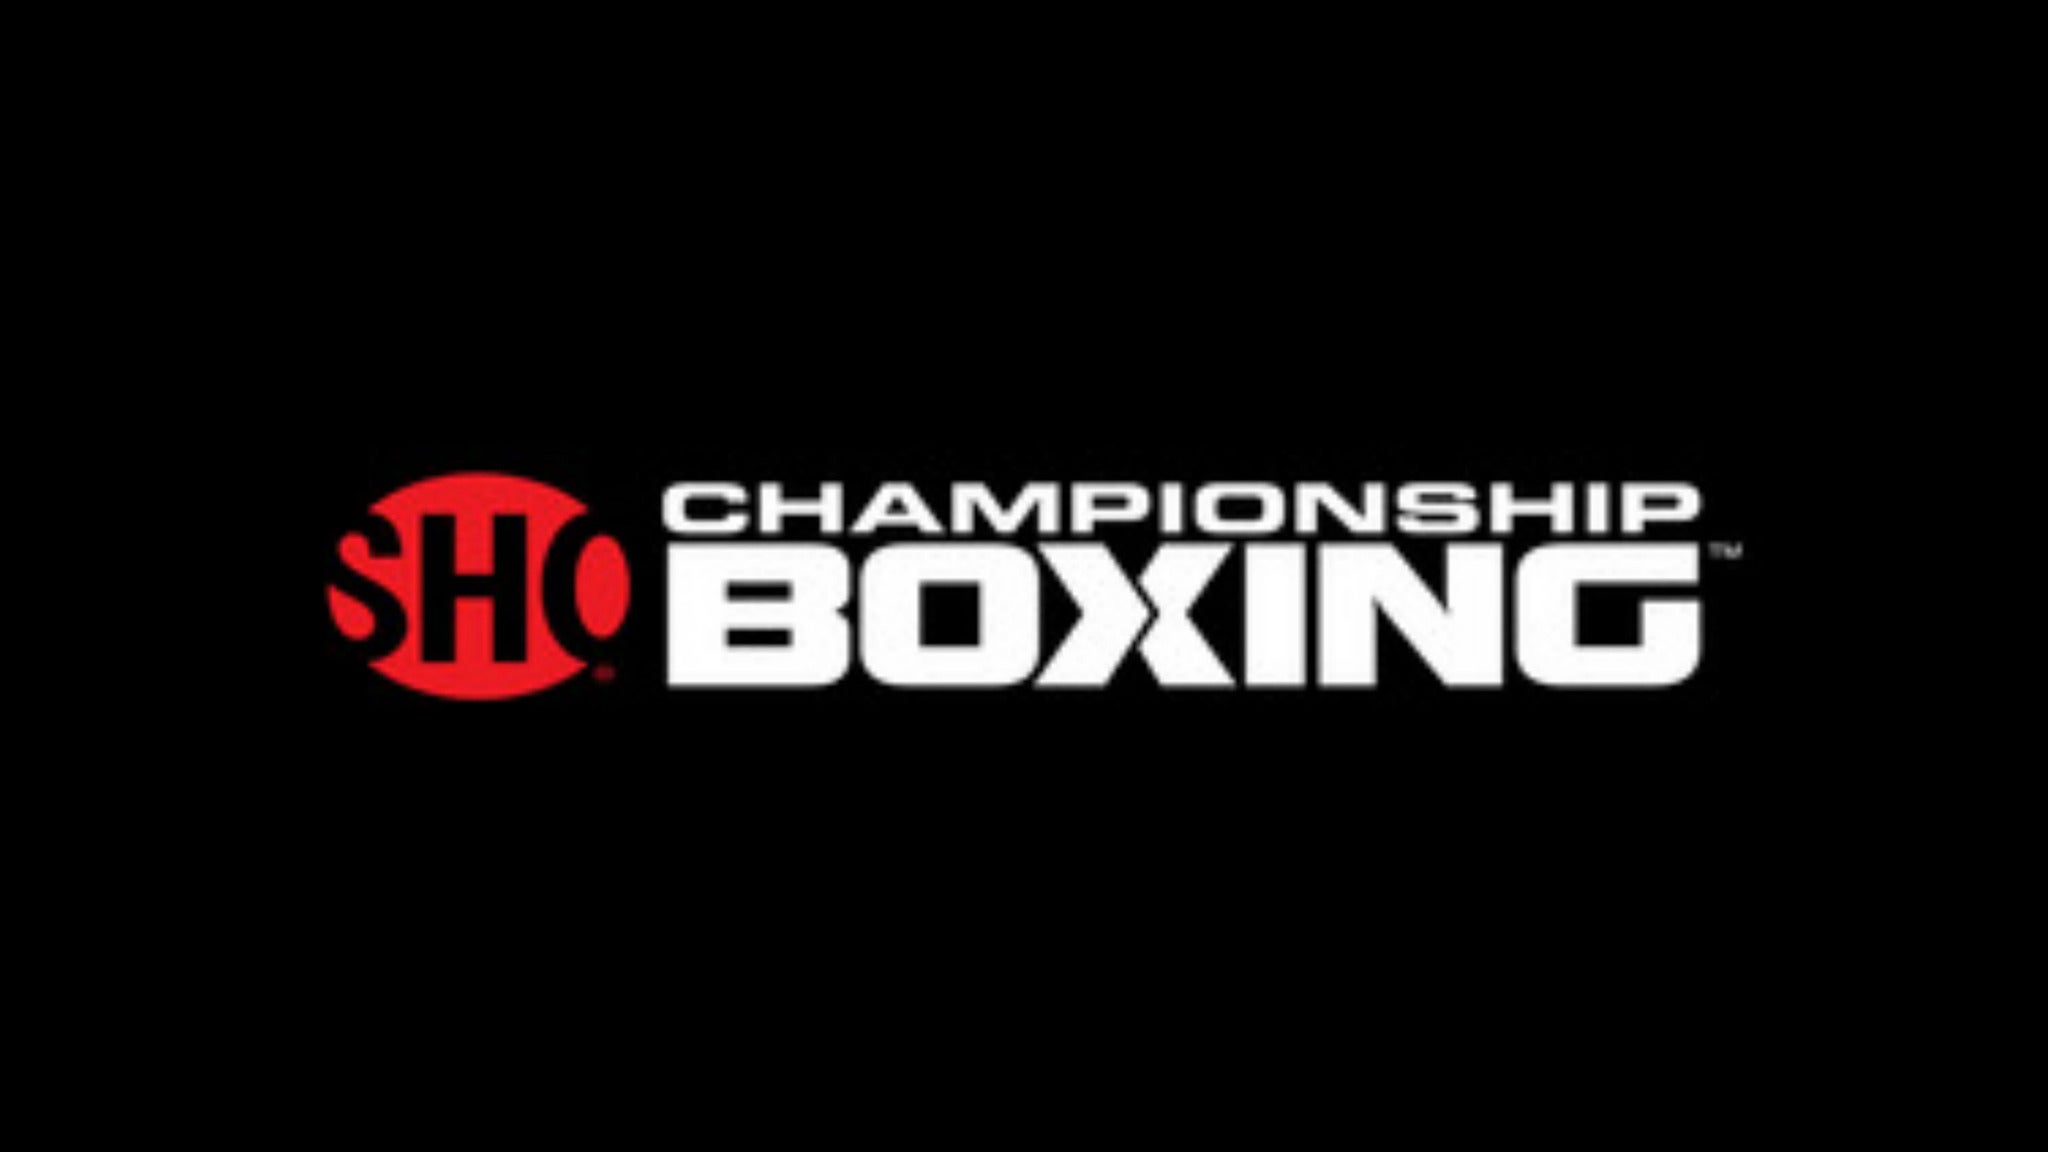 Benavidez v Lemieux on Showtime Championship Boxing in Glendale promo photo for Exclusive presale offer code